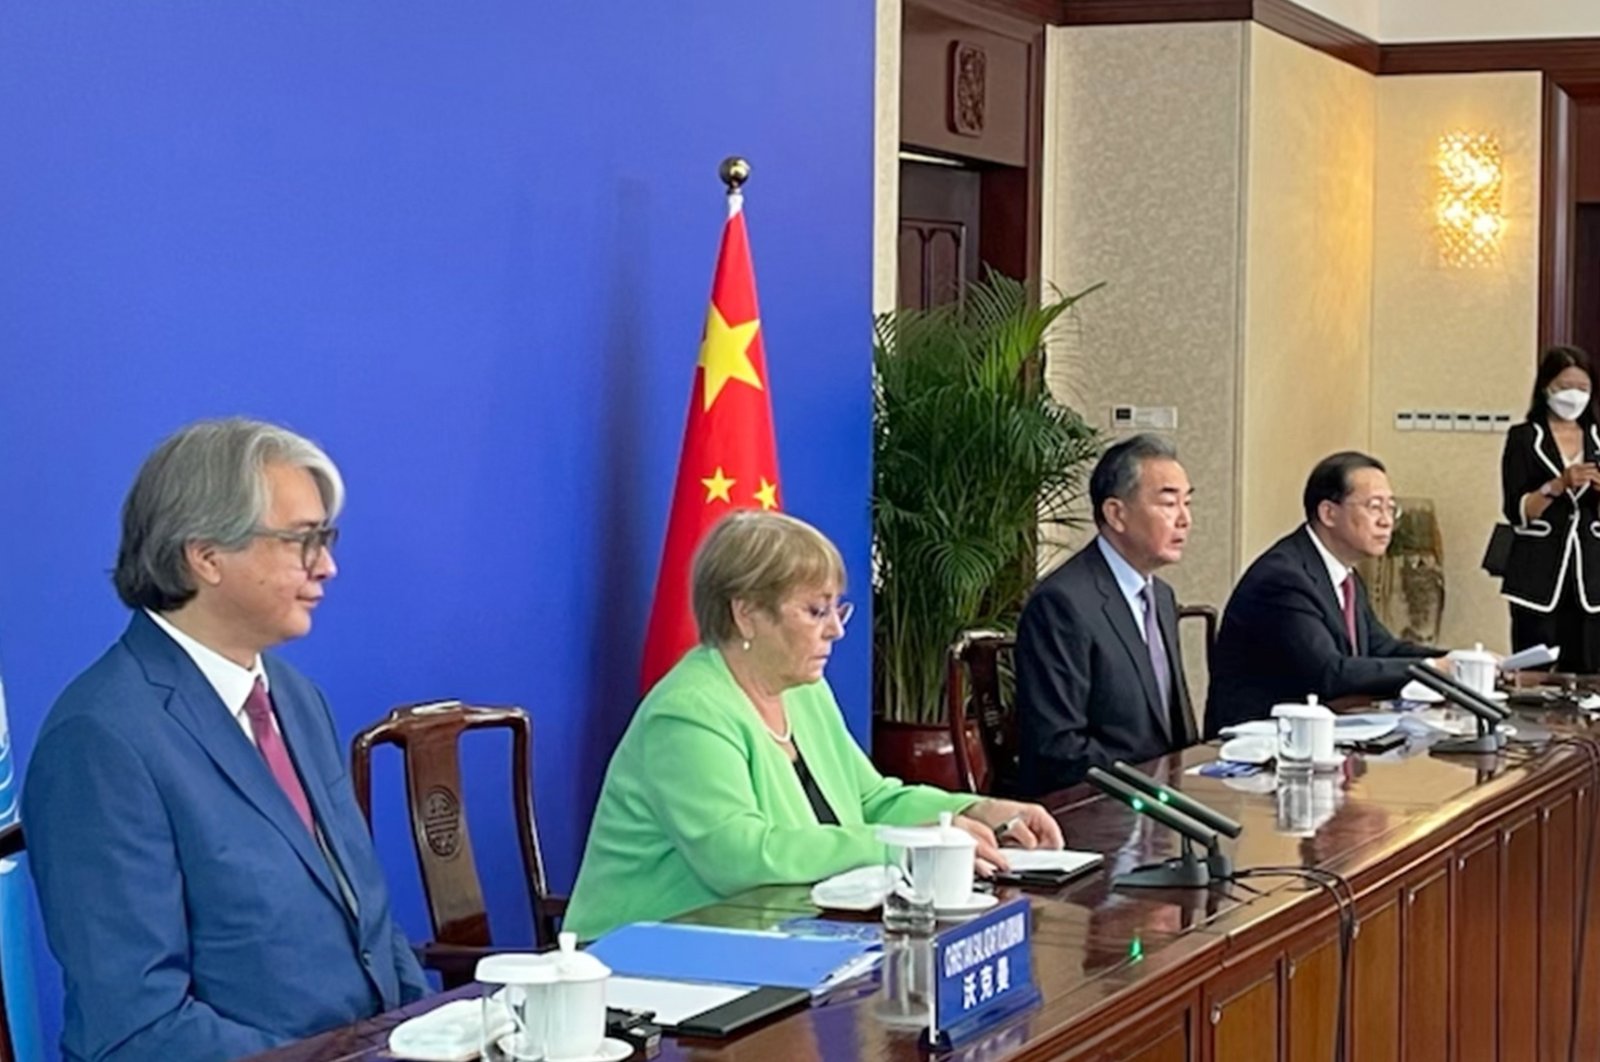 China didesak untuk meninjau kebijakan terhadap Uyghur, kata Bachelet PBB